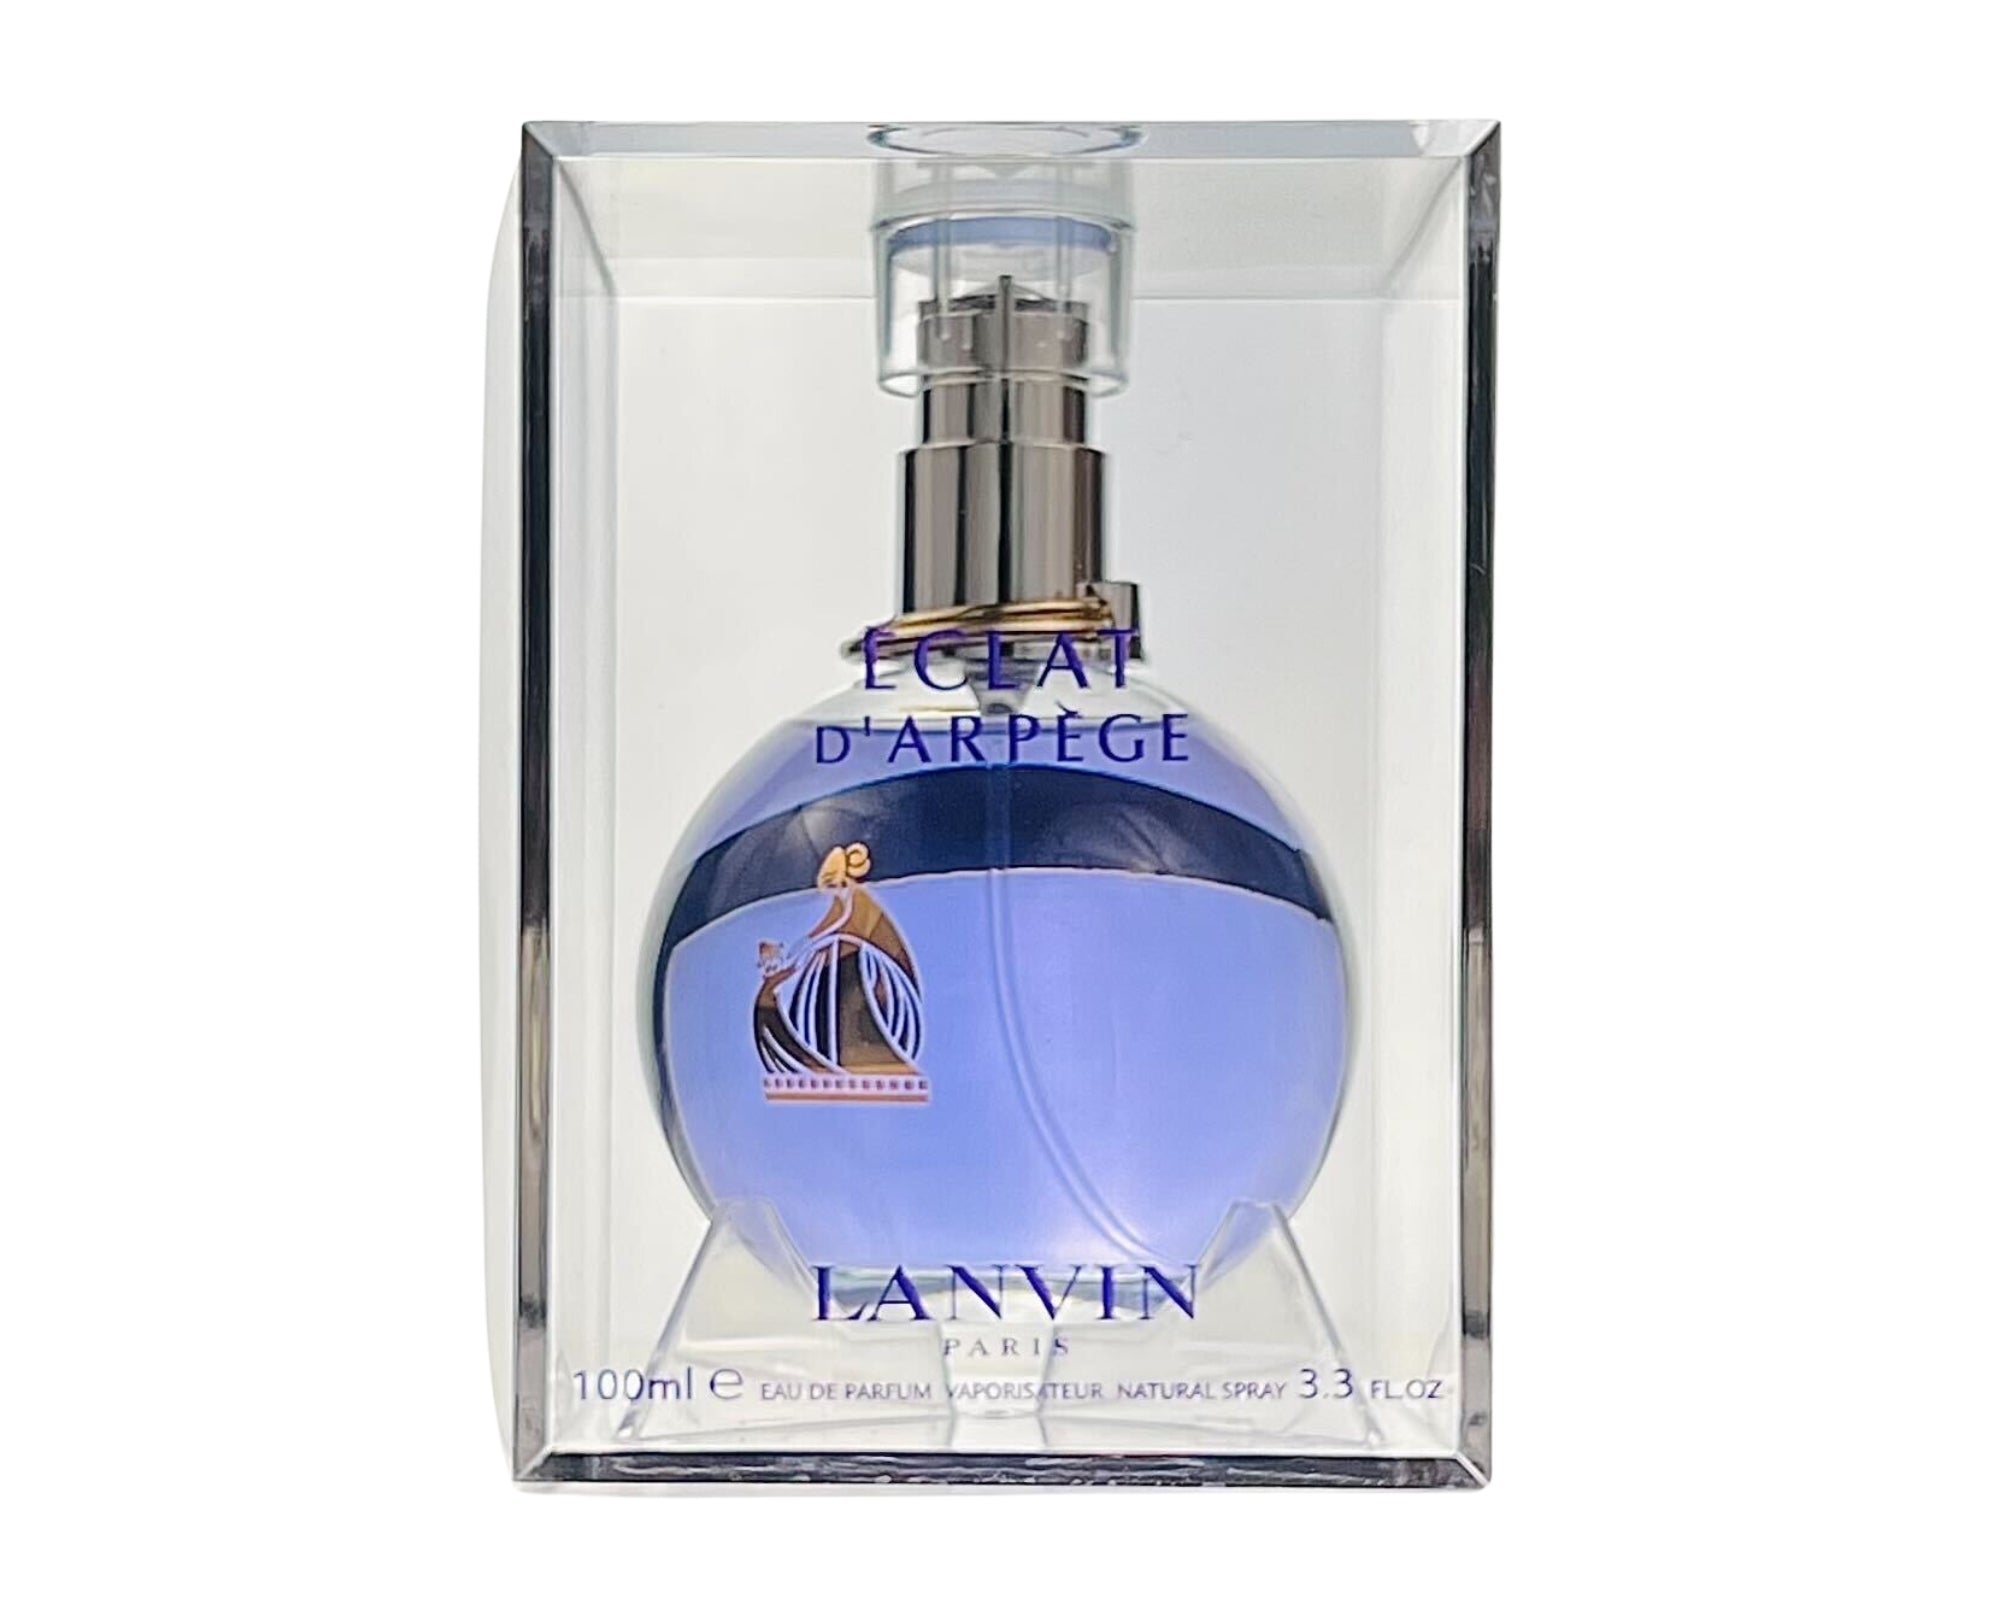 Eclat D'Arpege by Lanvin, Eau de Parfum Spray (women) 1 oz